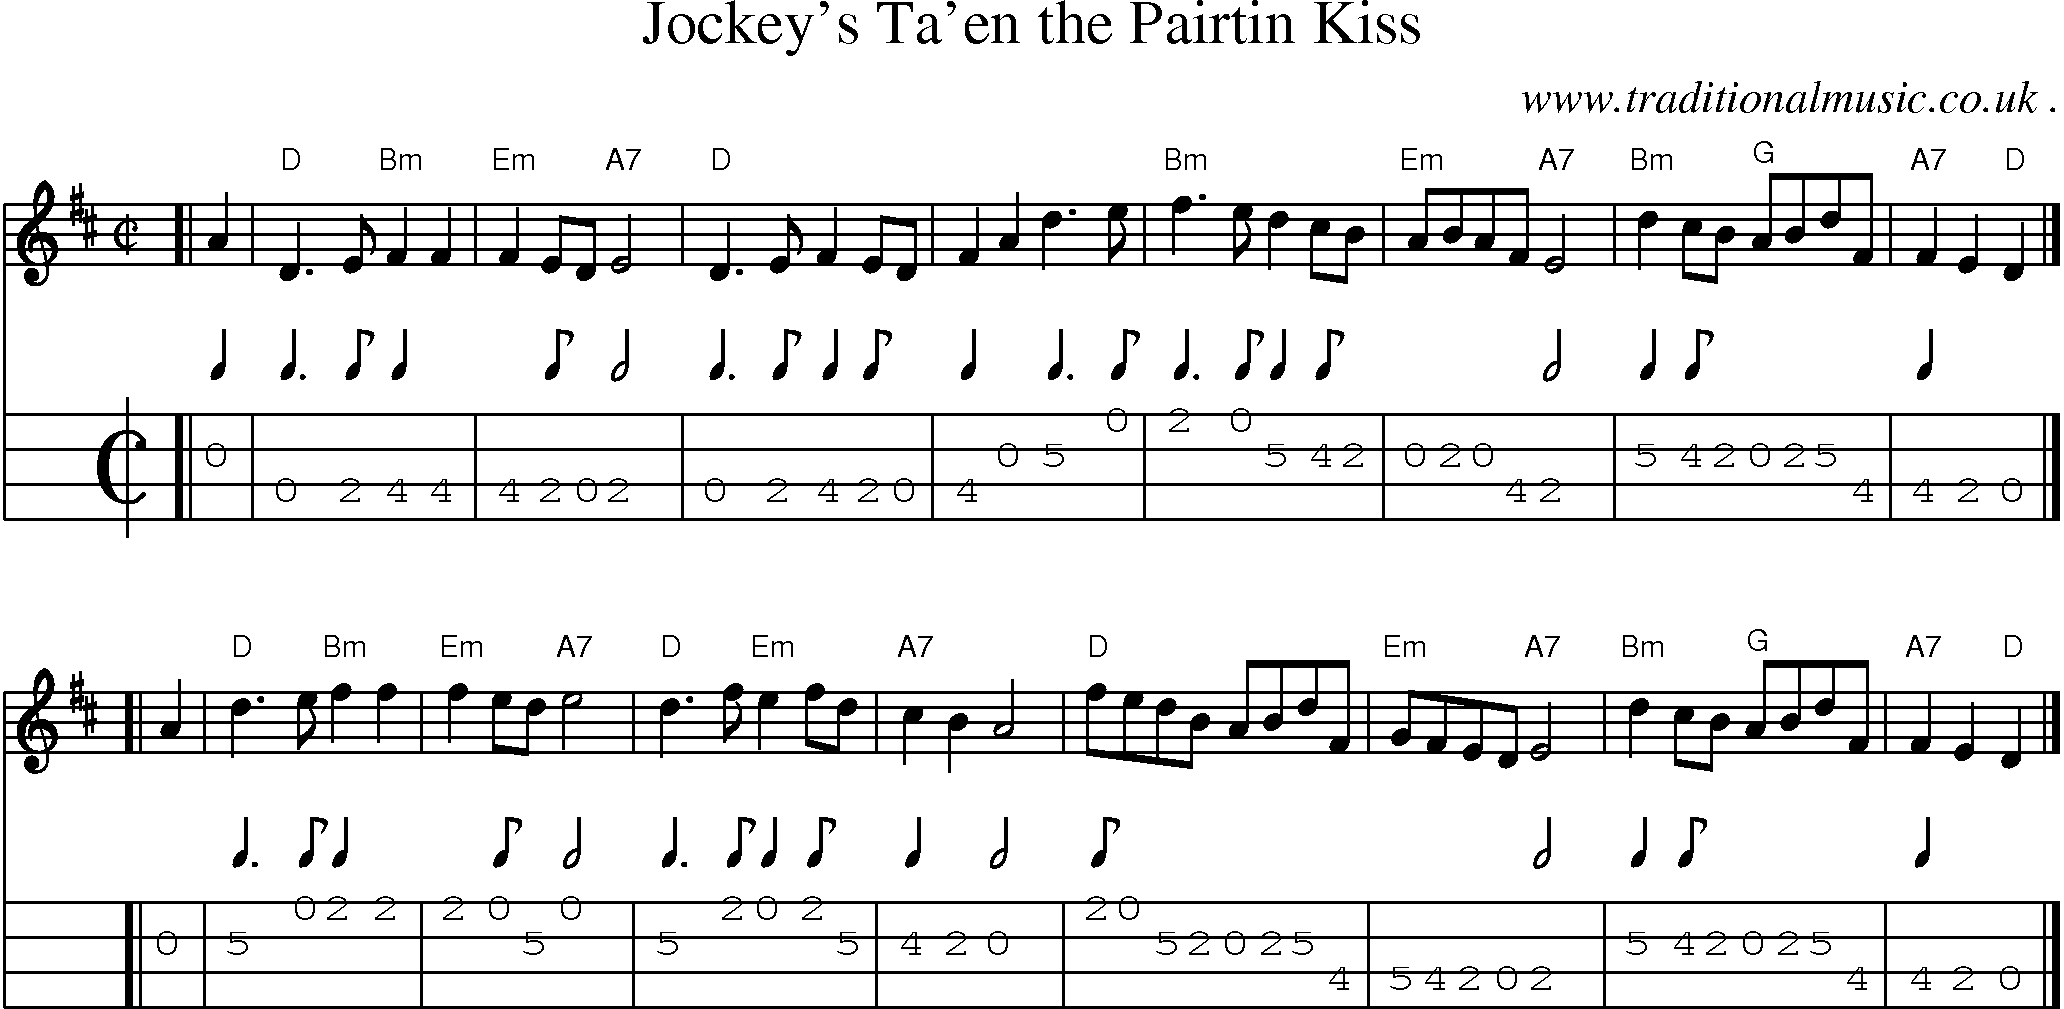 Sheet-music  score, Chords and Mandolin Tabs for Jockeys Taen The Pairtin Kiss